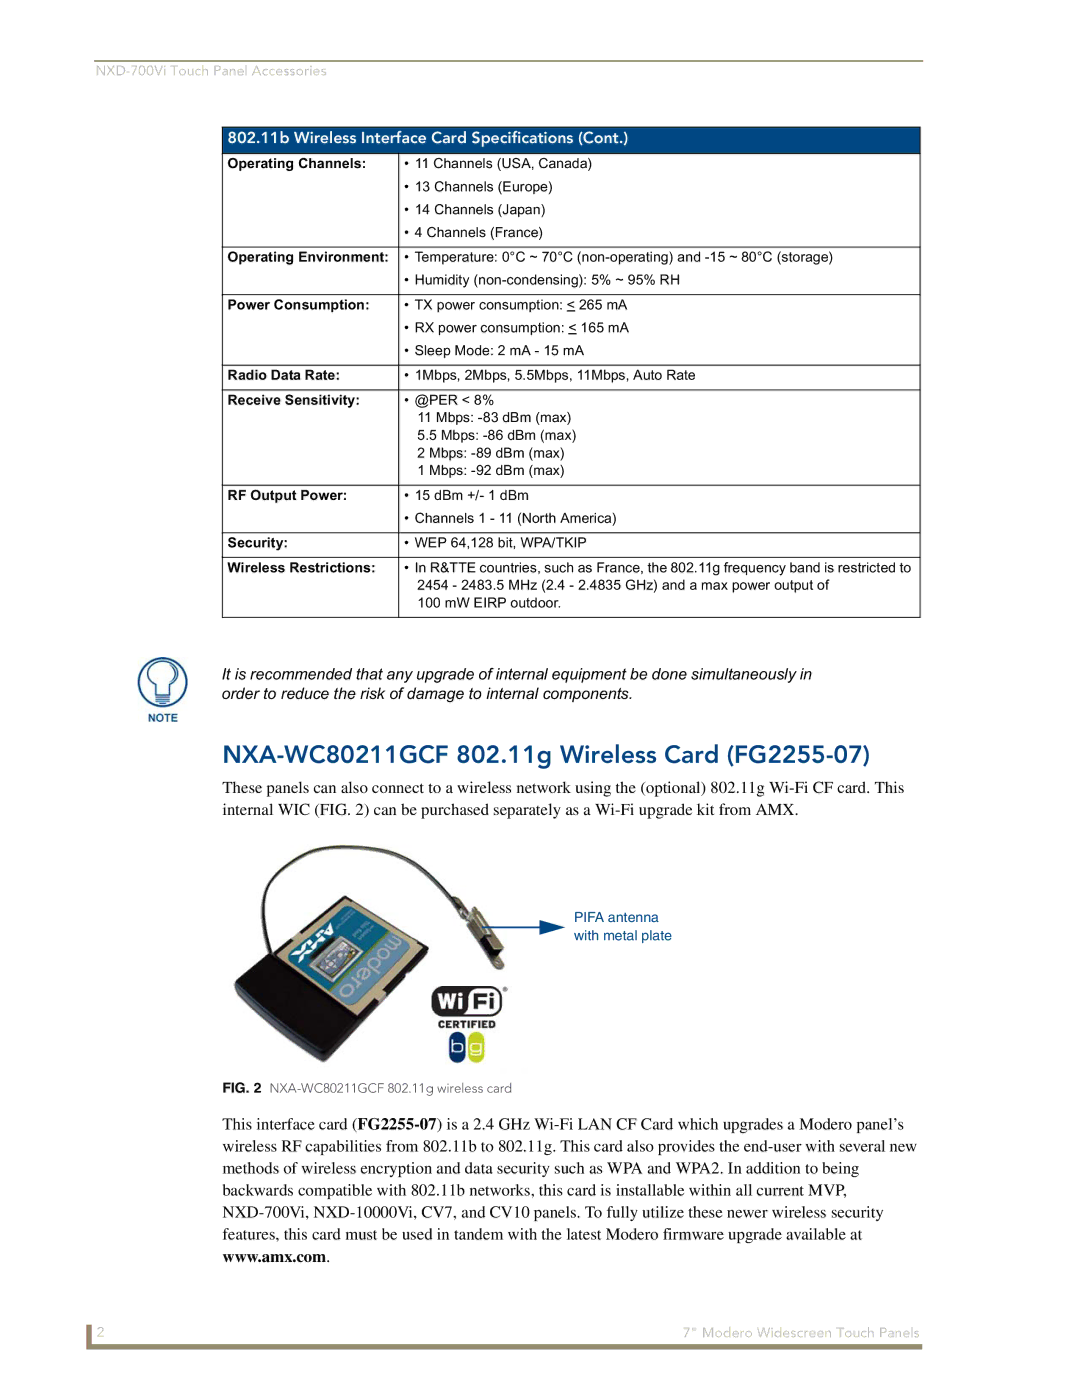 AMX NXD-700Vi manual NXA-WC80211GCF 802.11g Wireless Card FG2255-07 